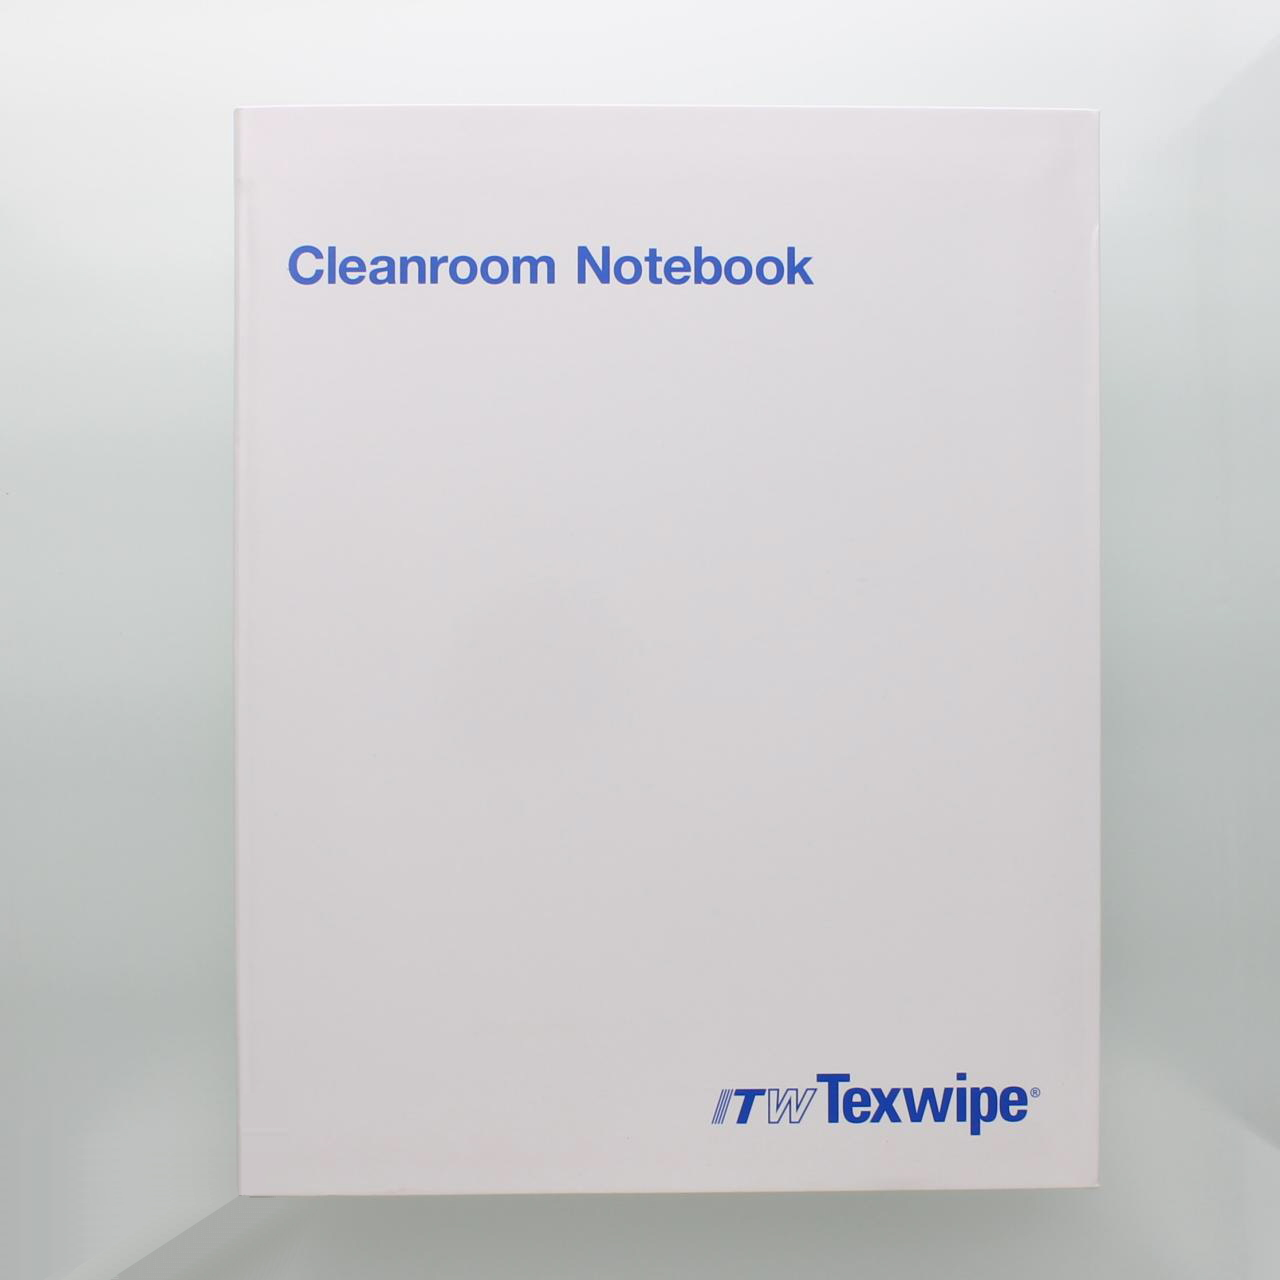 White Cleanroom Paper 11 x 17 24 lb.